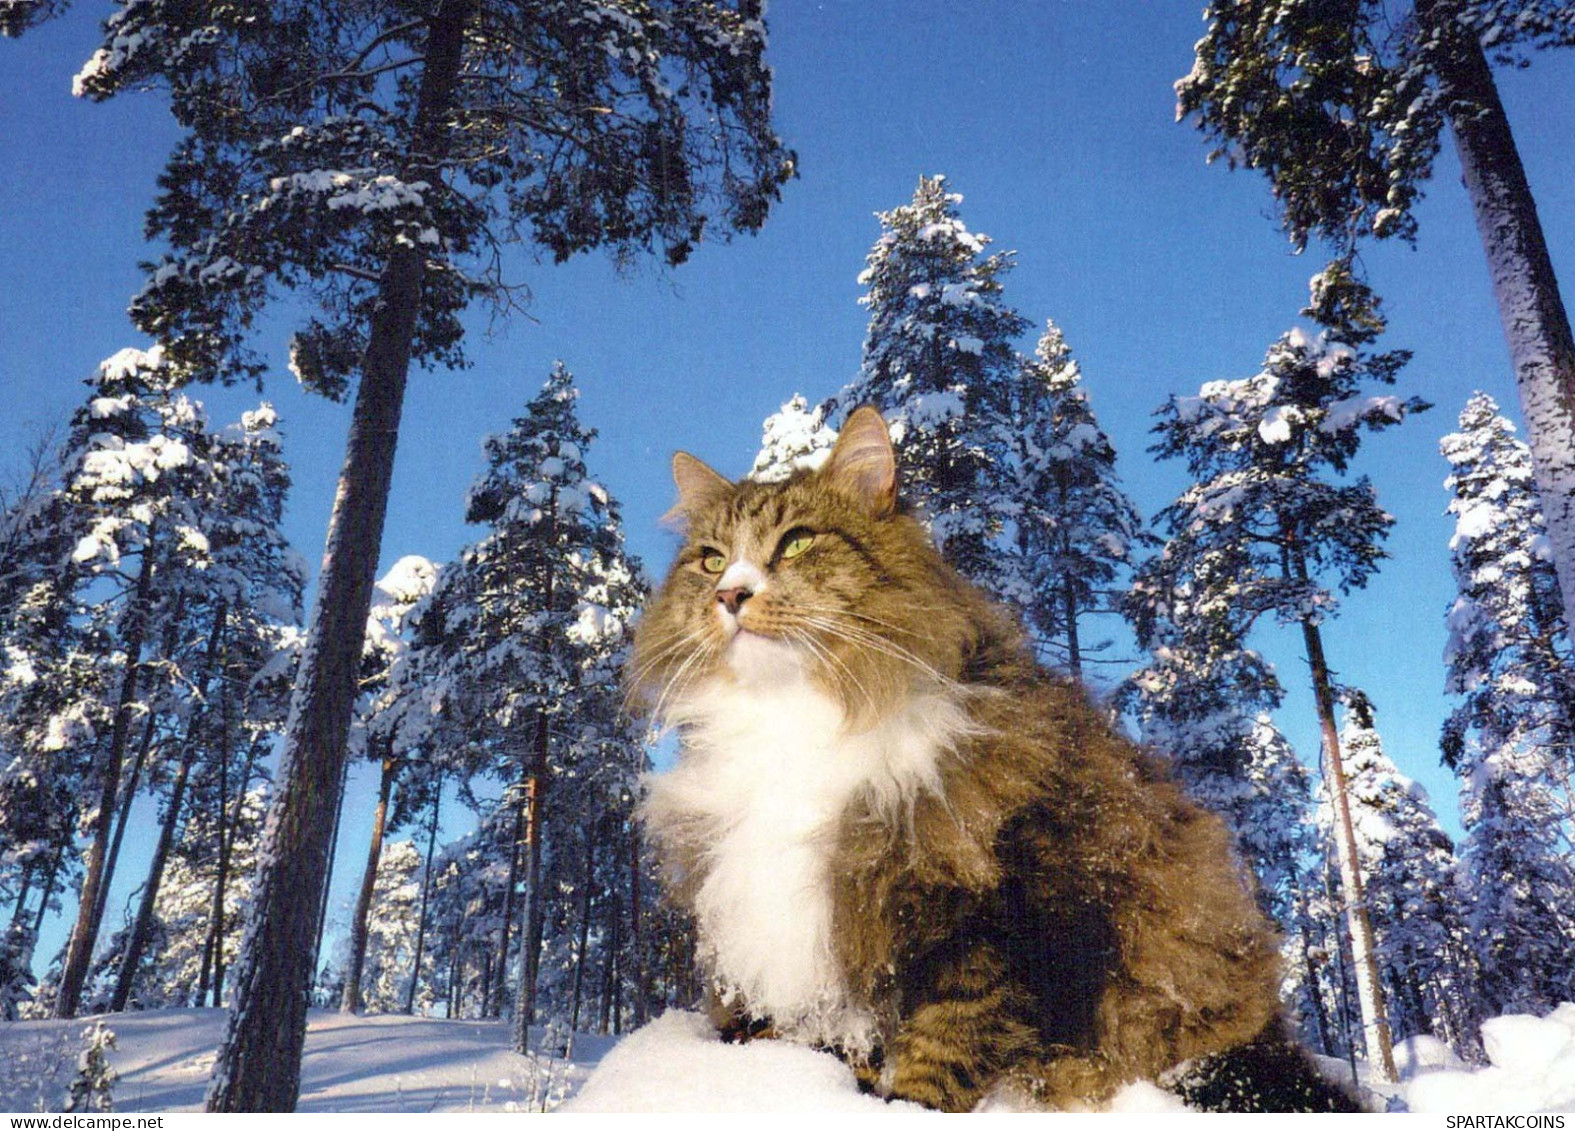 GATTO KITTY Animale Vintage Cartolina CPSM #PBQ835.A - Cats